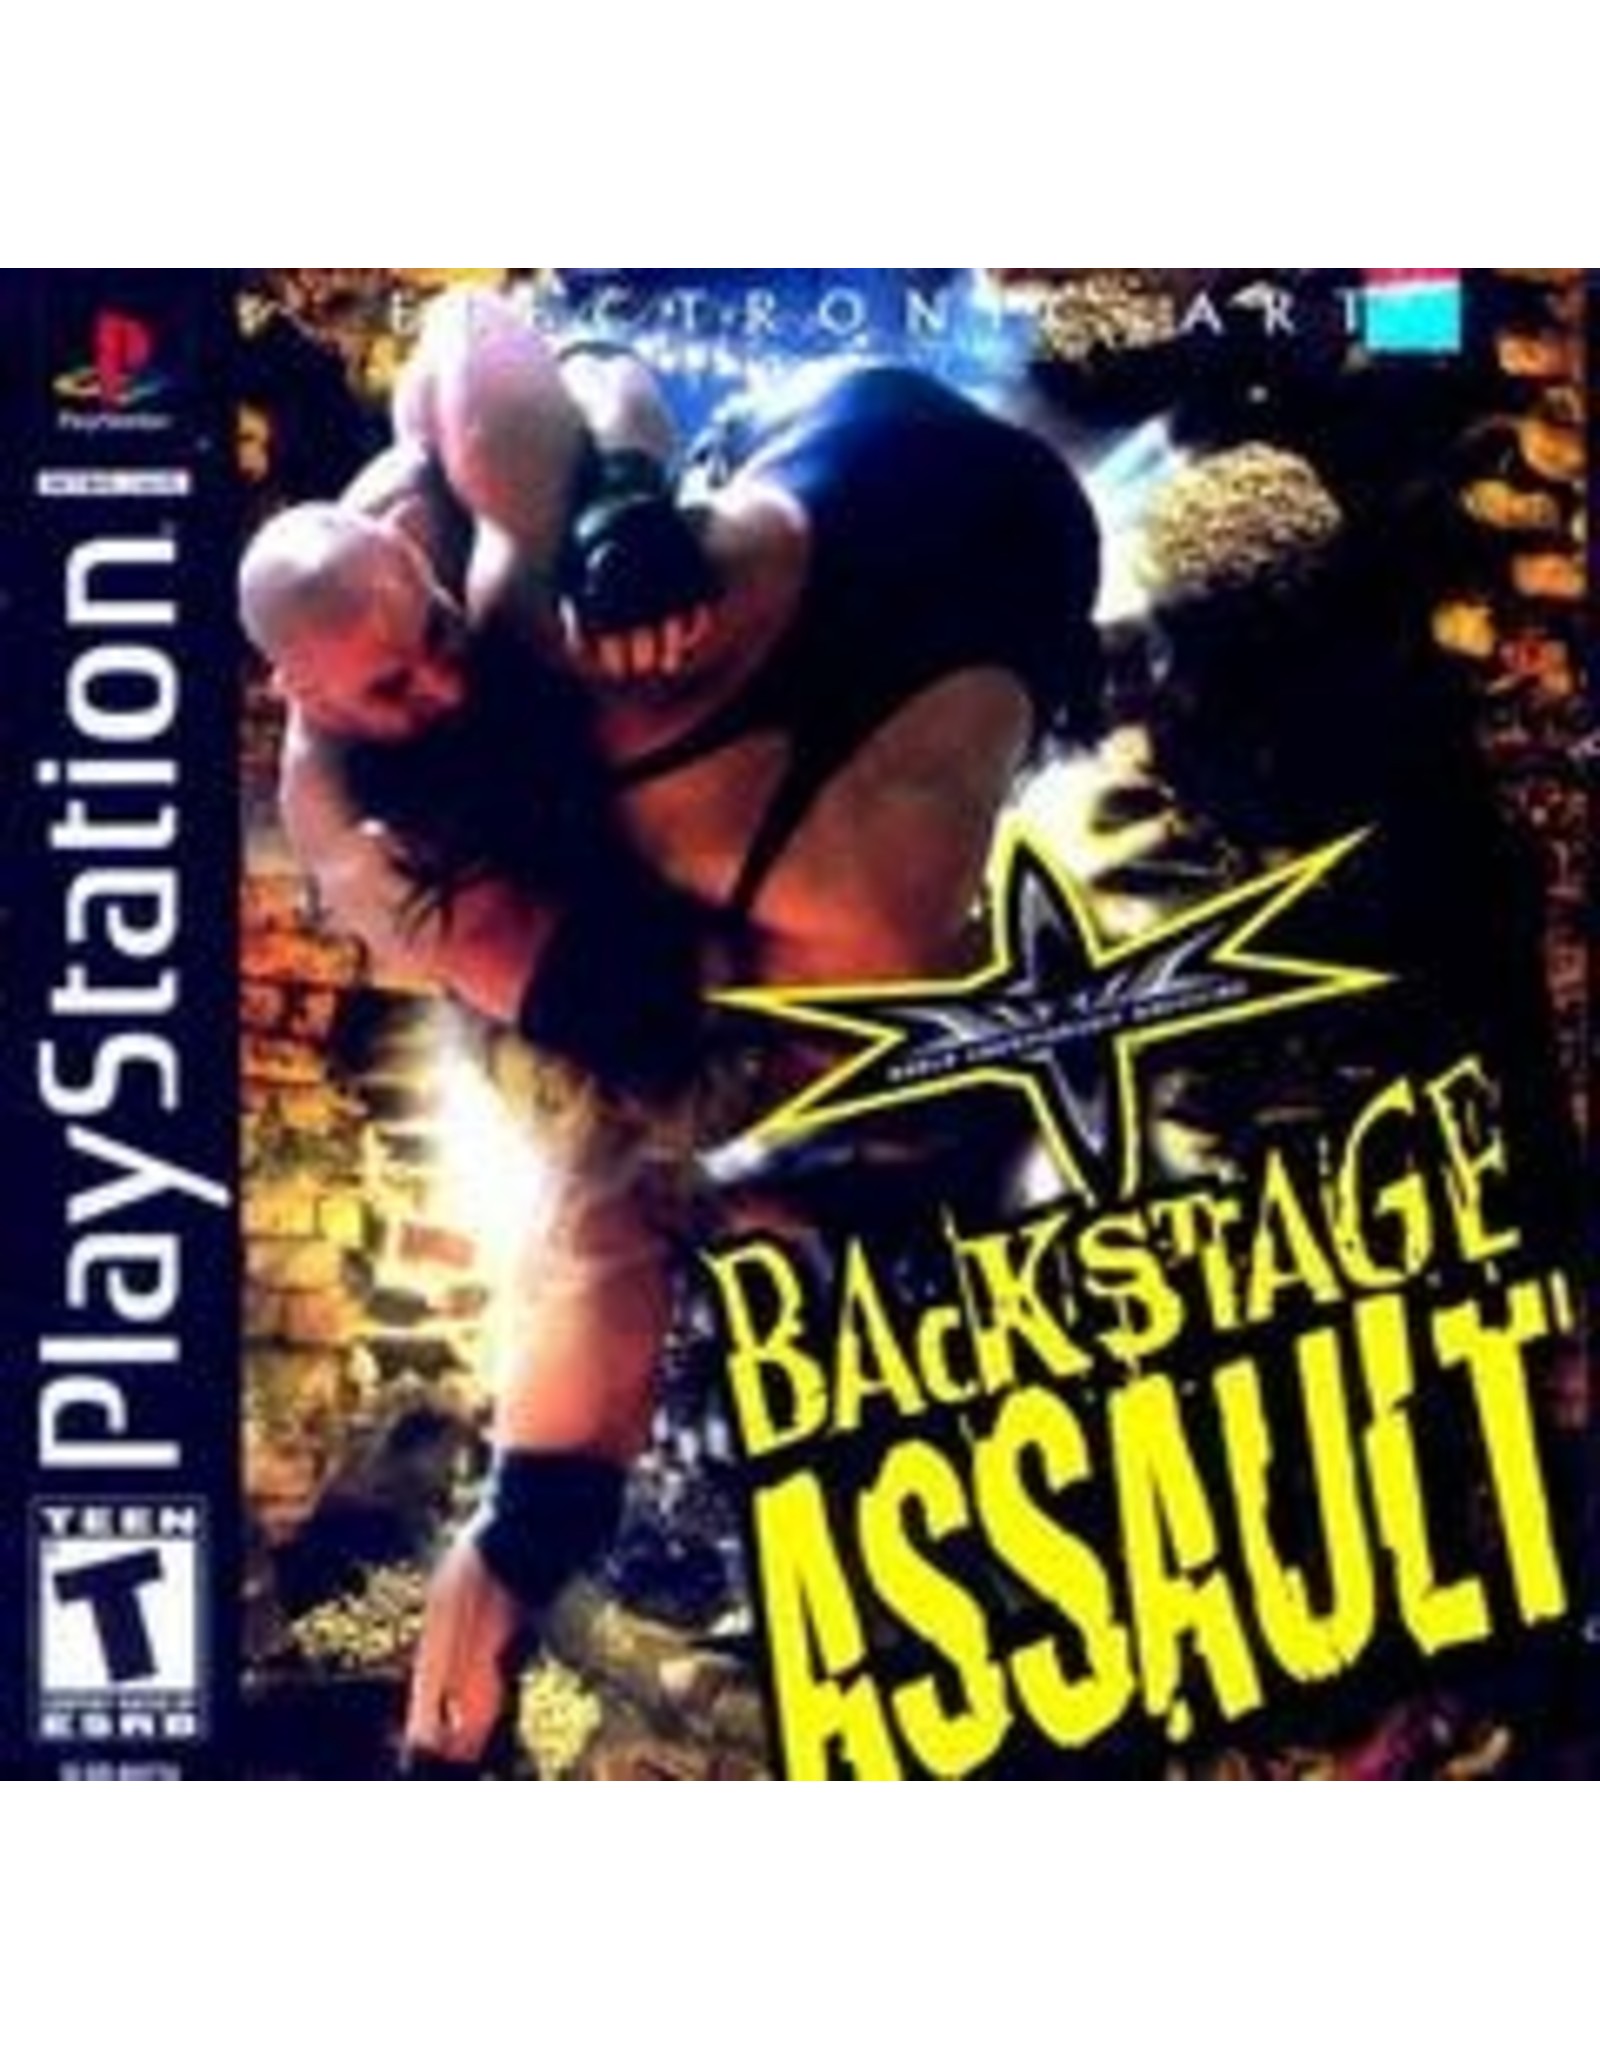 Playstation WCW Backstage Assault (No Manual)